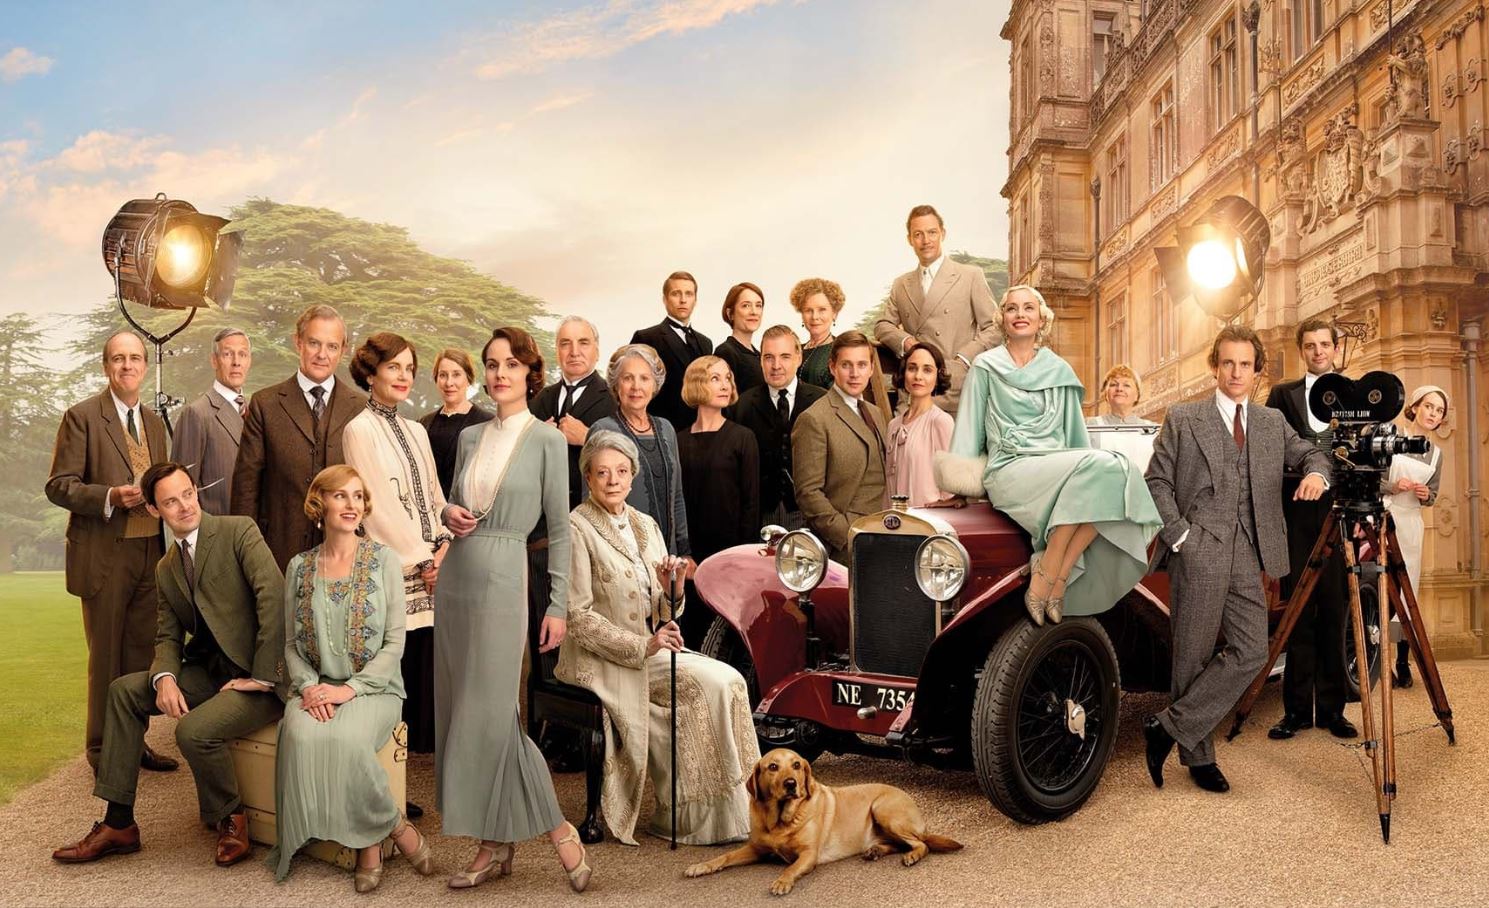 Watch Movie Downton Abbey: A New Era (2022) Full Fre Online